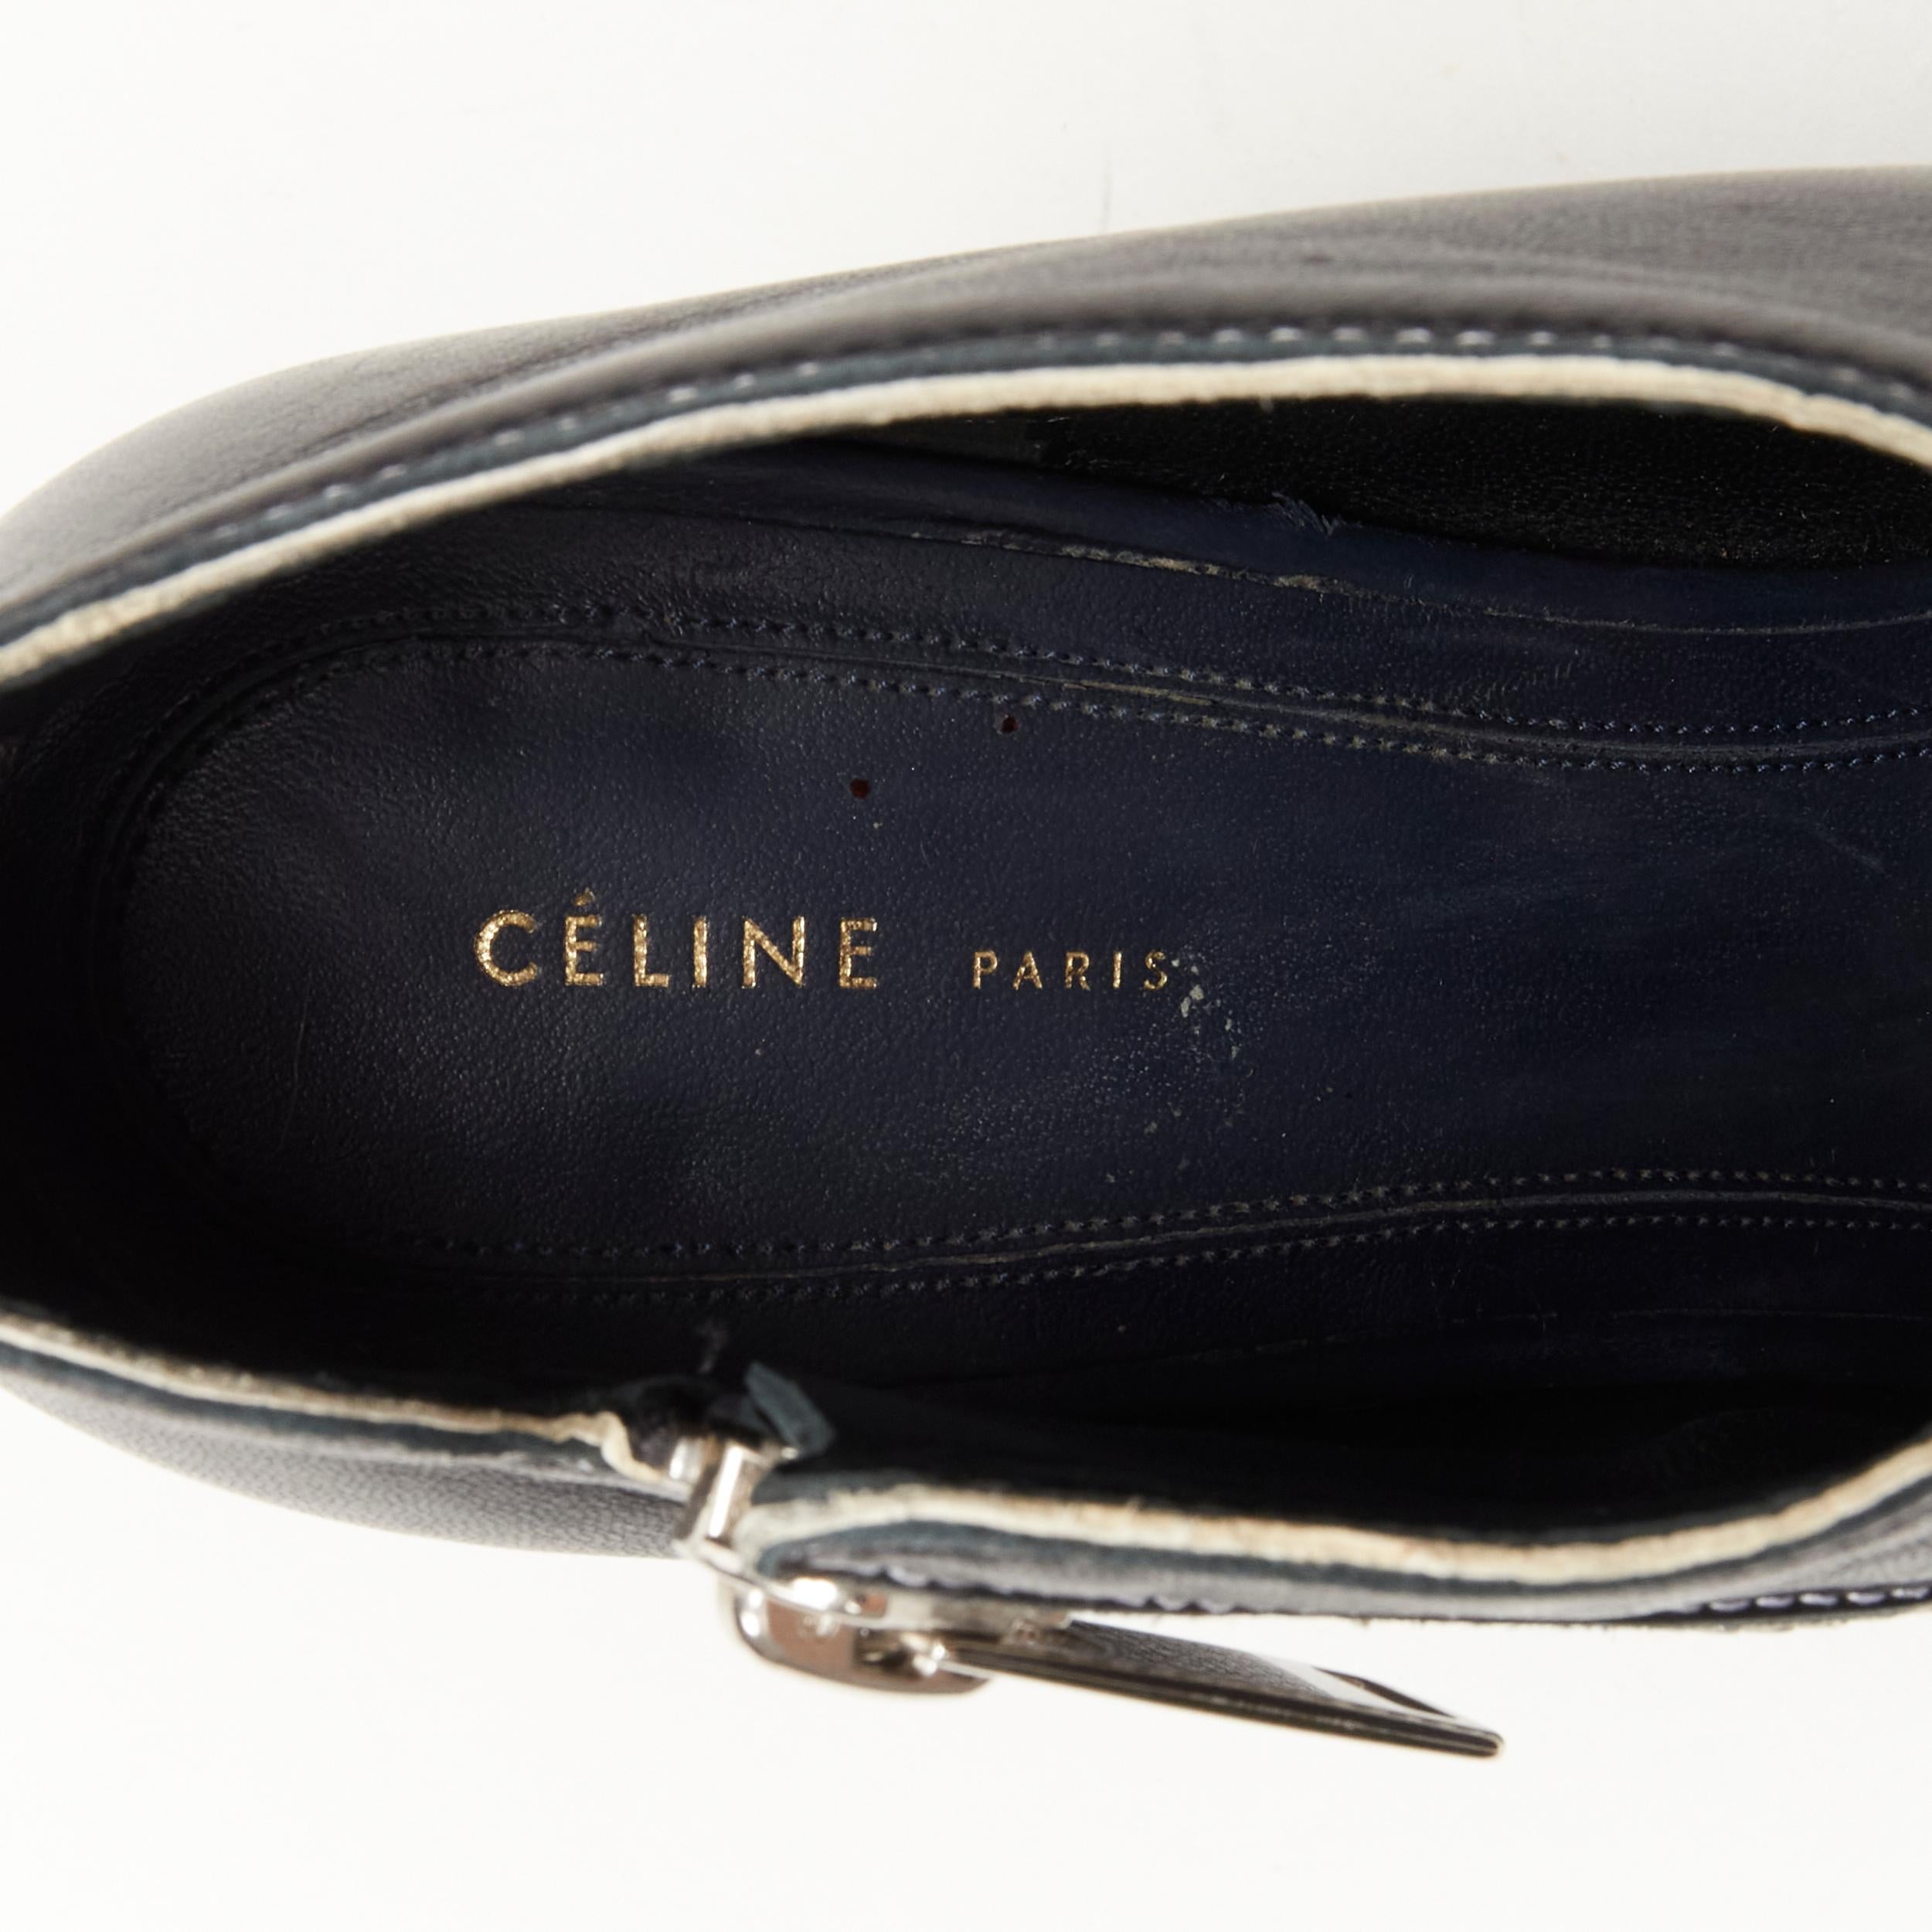 OLD CELINE Phoebe Philo black leather twist silver zip cone heel bootie EU36.5 For Sale 1